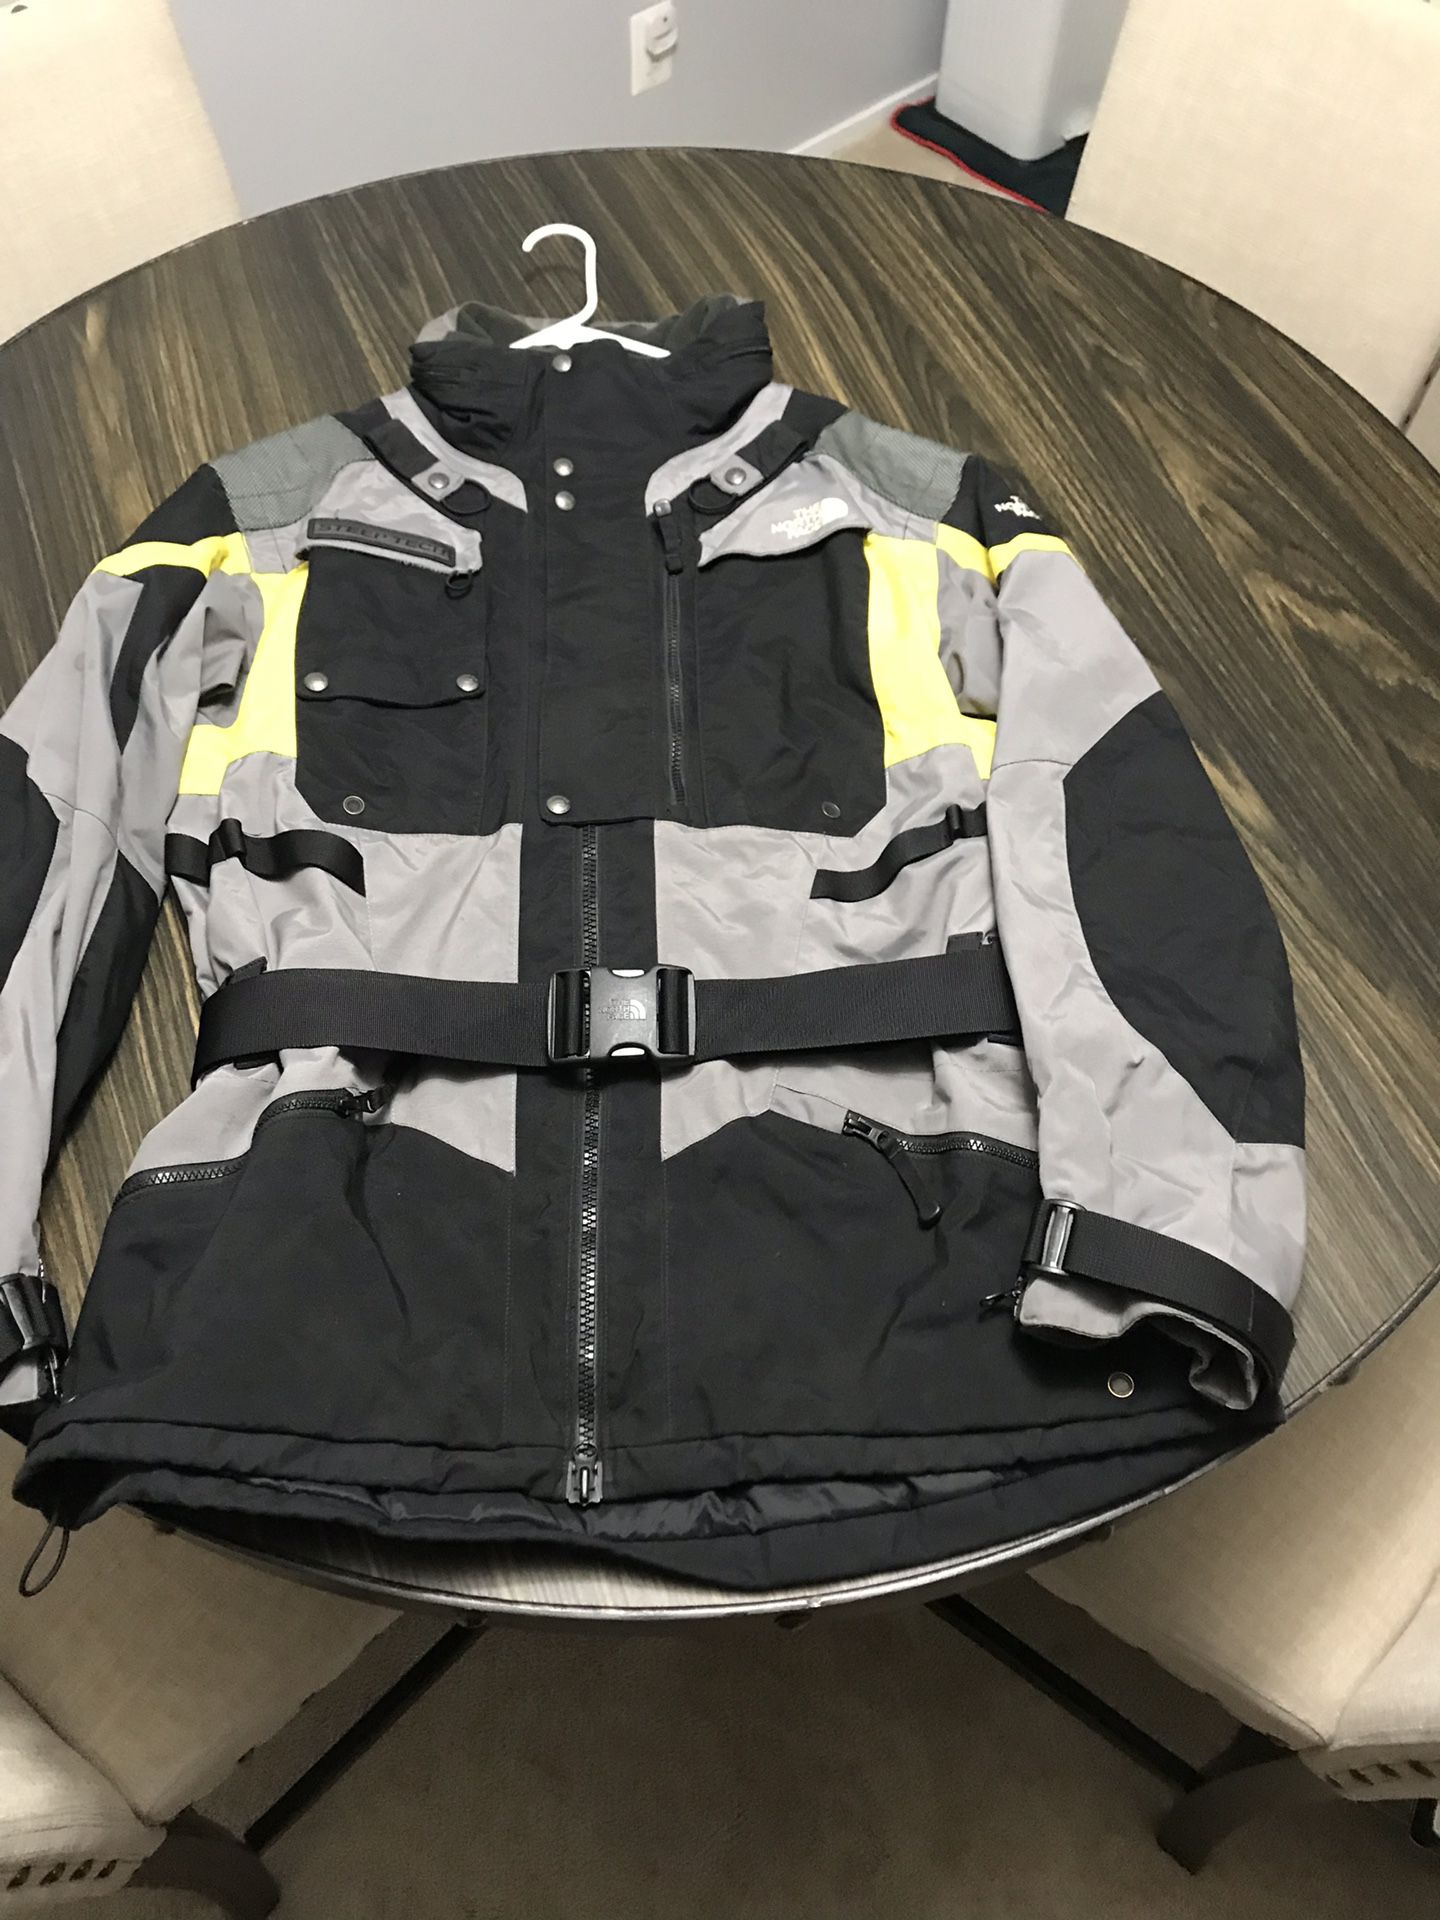 Men’s NorthFace Steeptech jacket